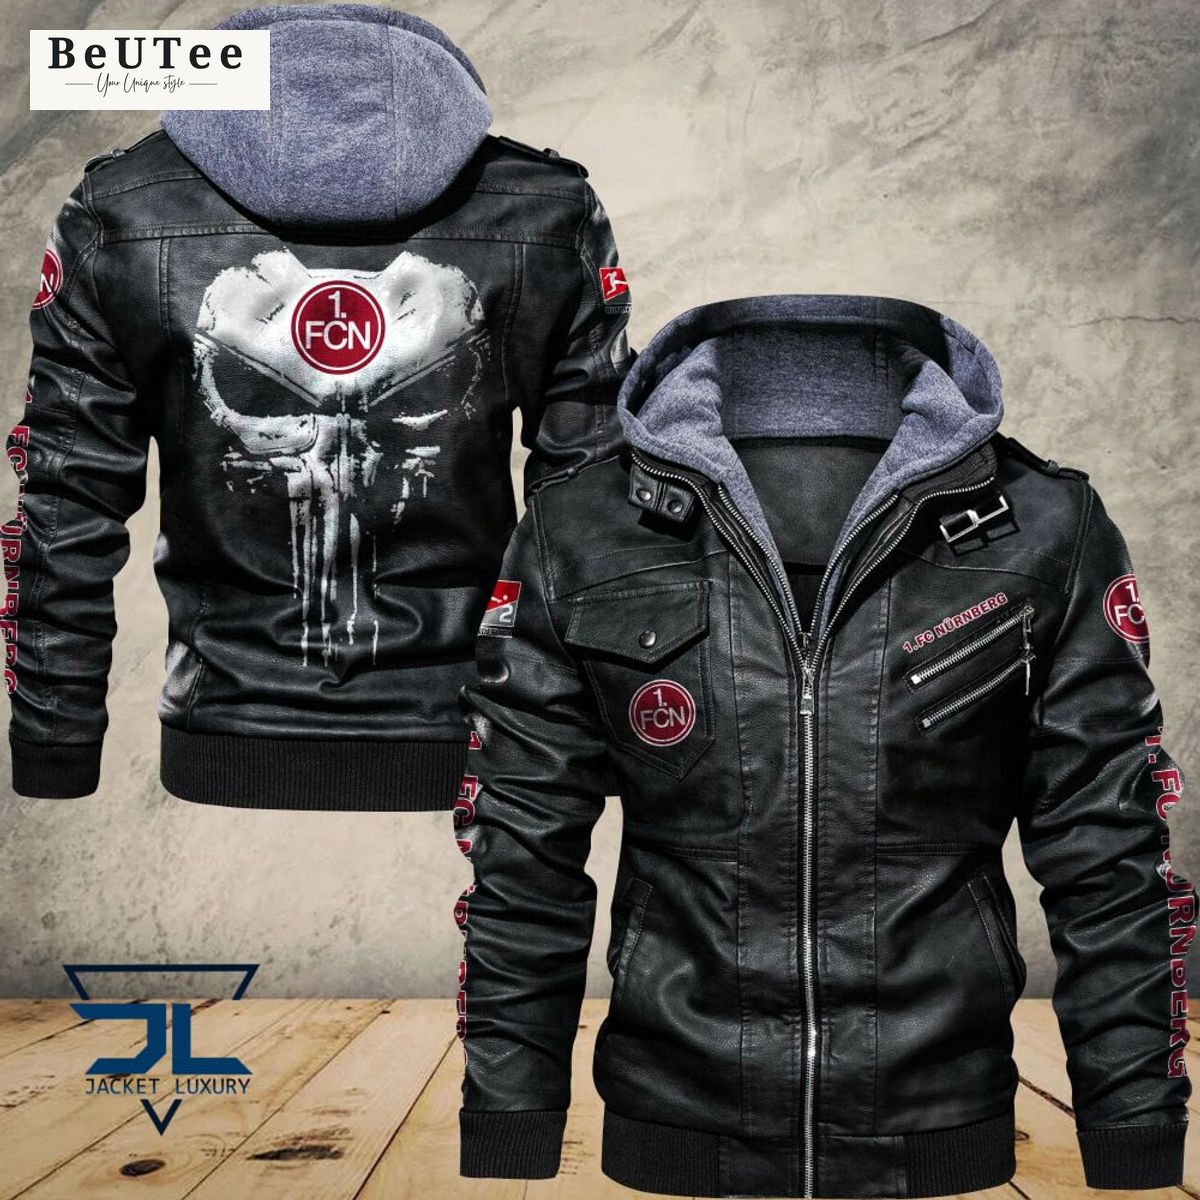 fc nurnberg bundesliga germany league 2d leather jacket 1 bzLSF